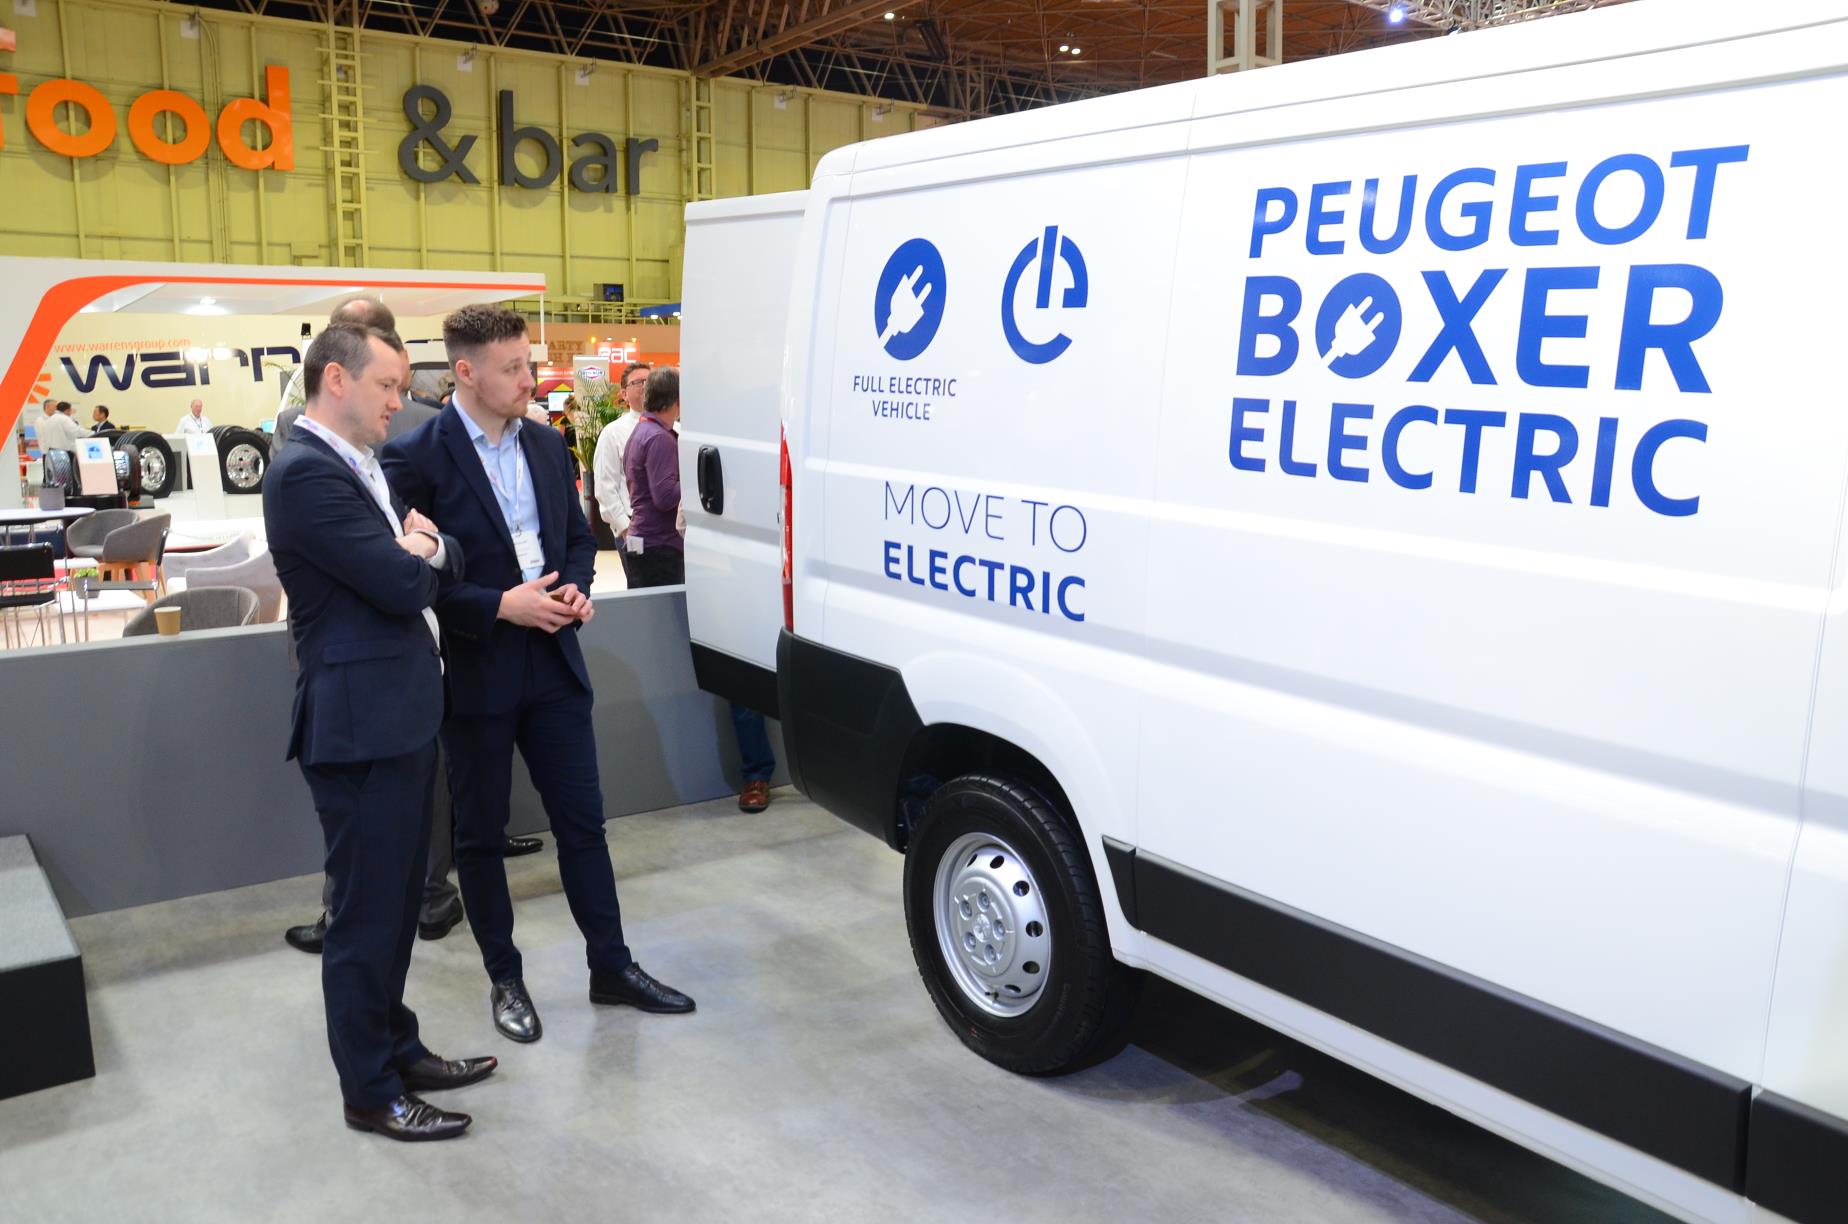 Peugeot Boxer Electric 2019 (2)